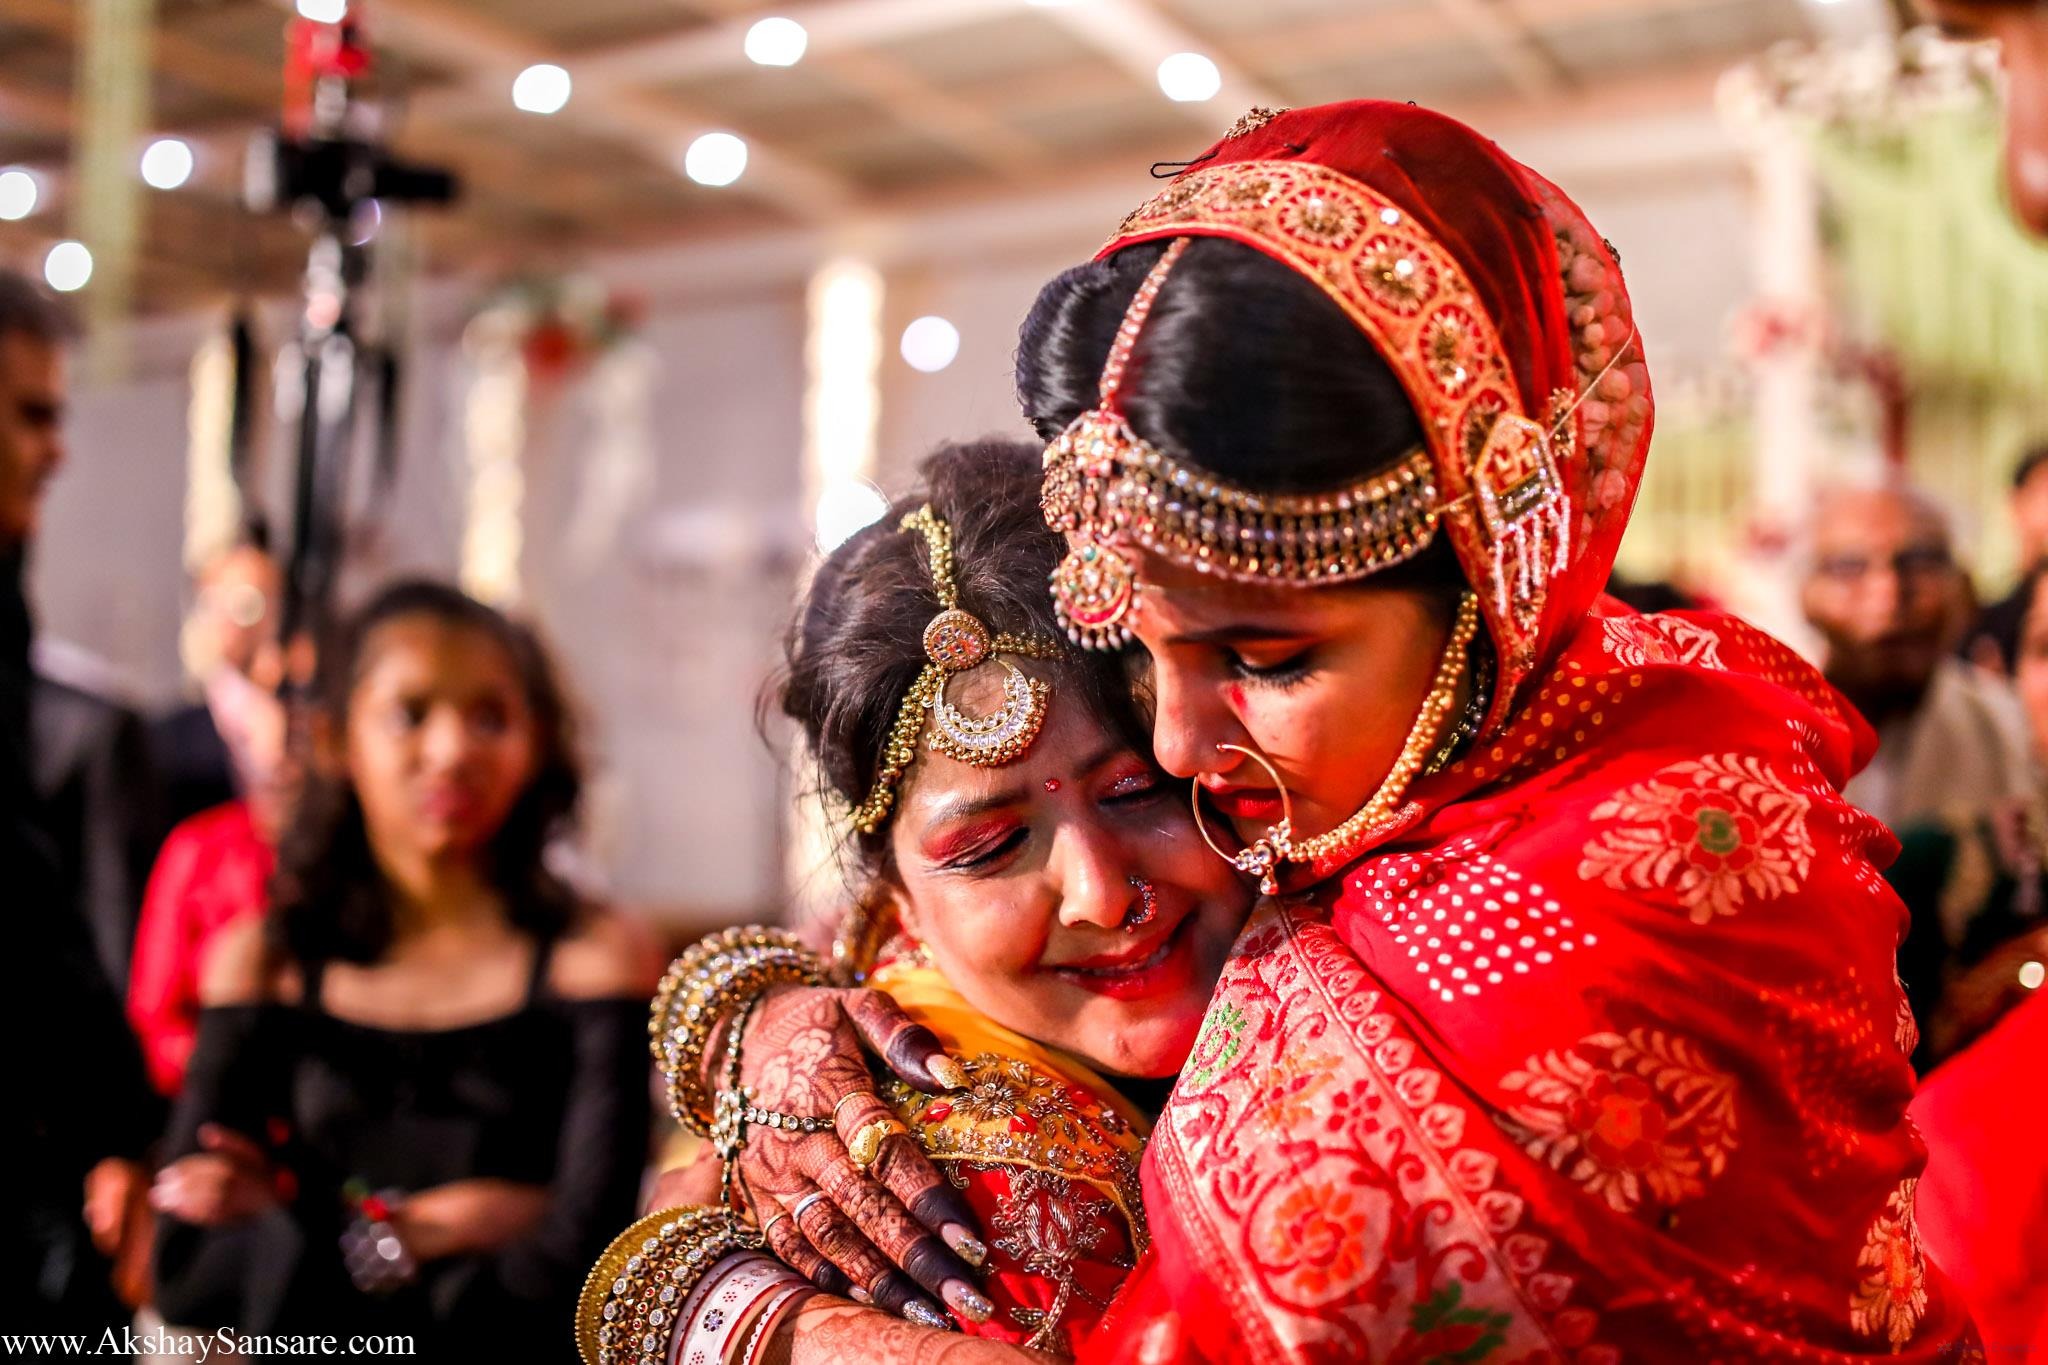 Akshay Sansare  & Films Wedding Photographer, Mumbai